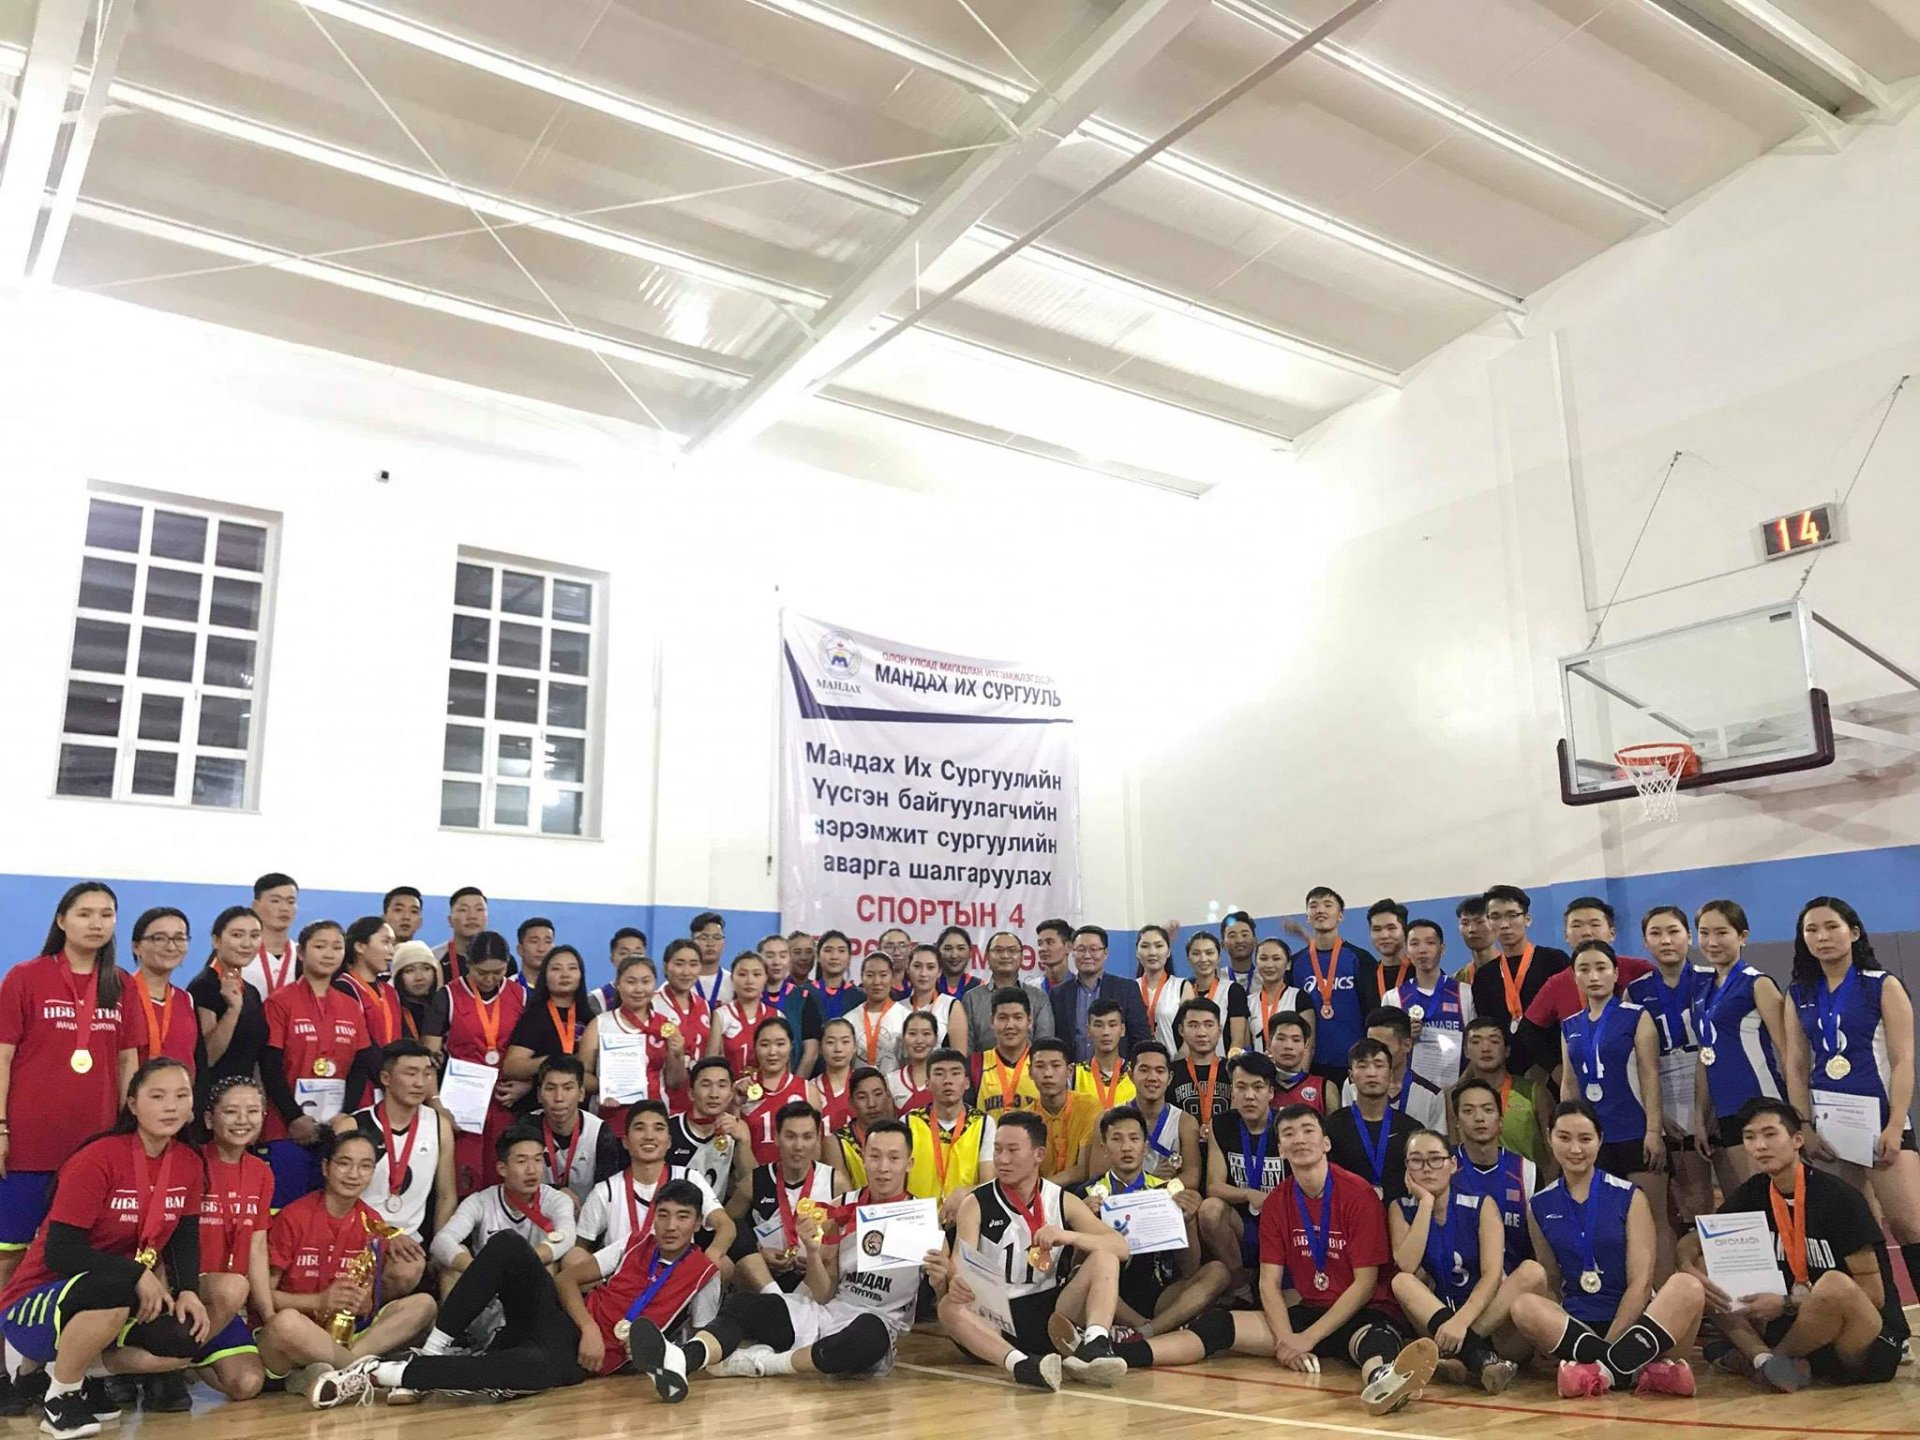 School Sports Championship was held 